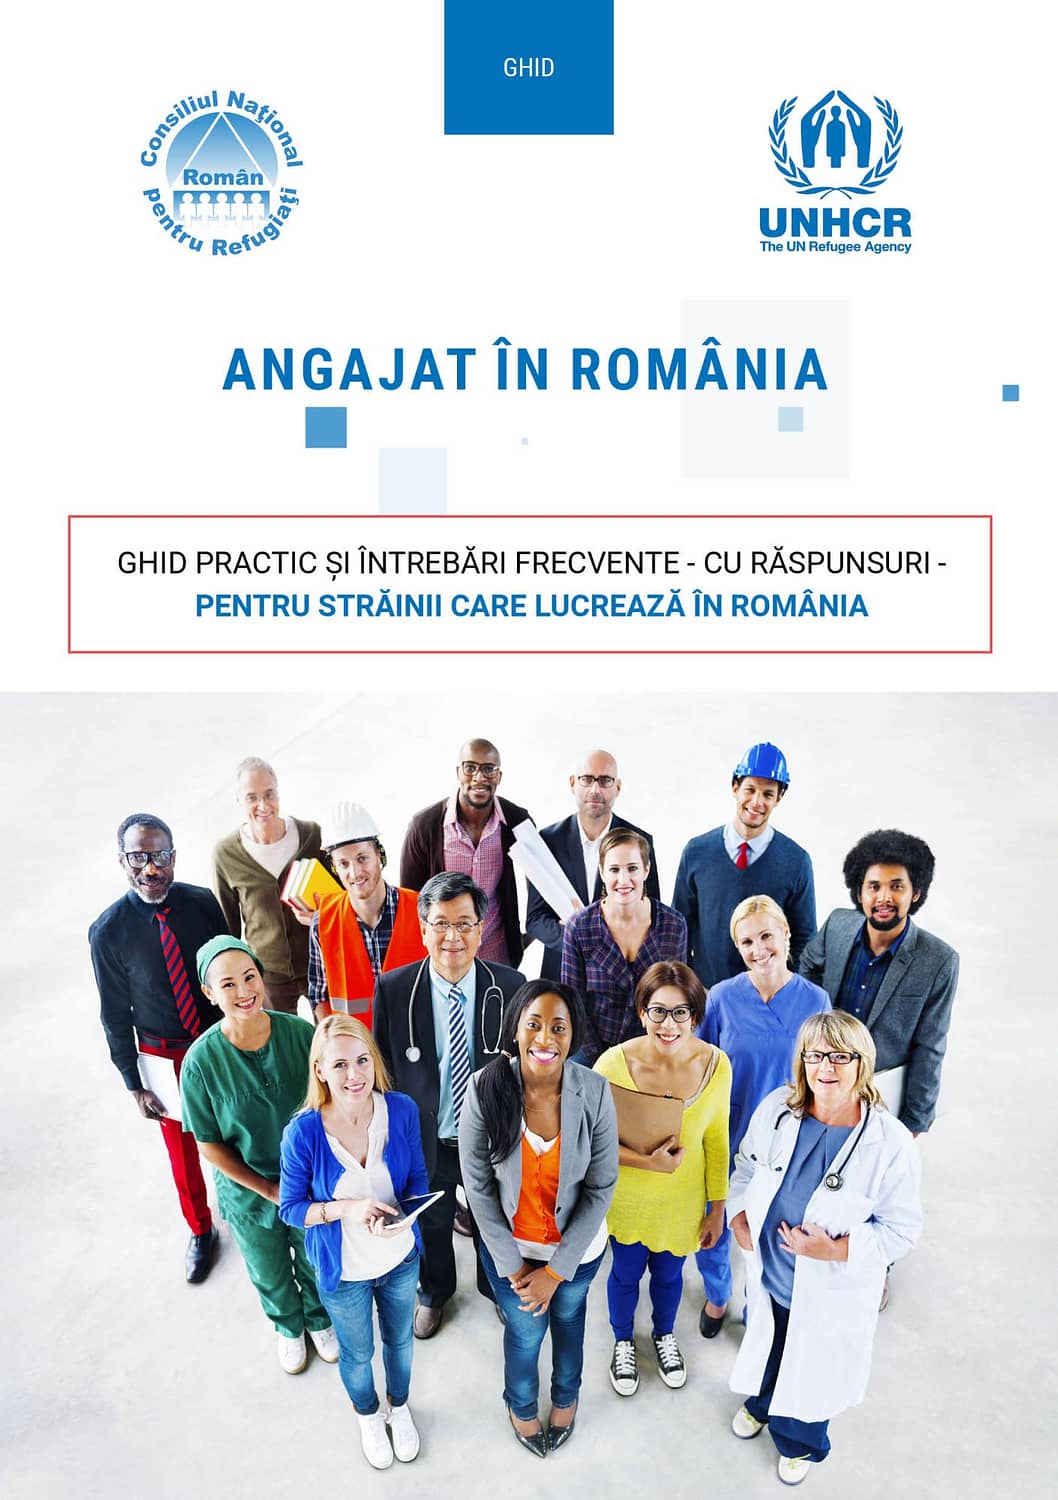 Angajat in Romania, romana, ghid, brosura, publishing design